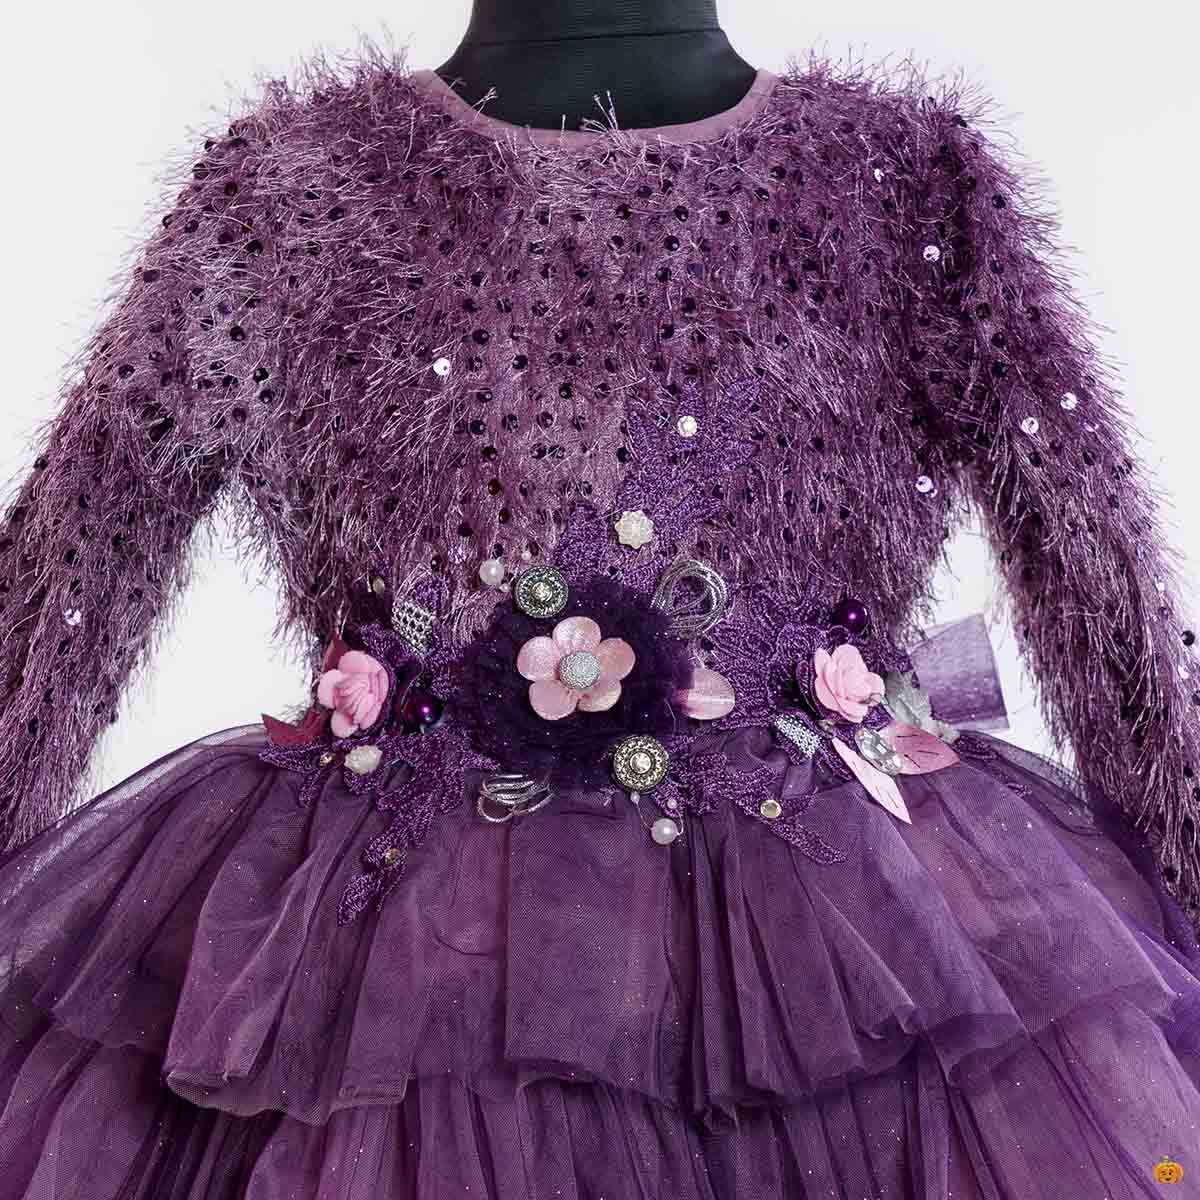 Shop Online Girls Purple Sleeveless Floral Embellished Party Dress at ₹1641